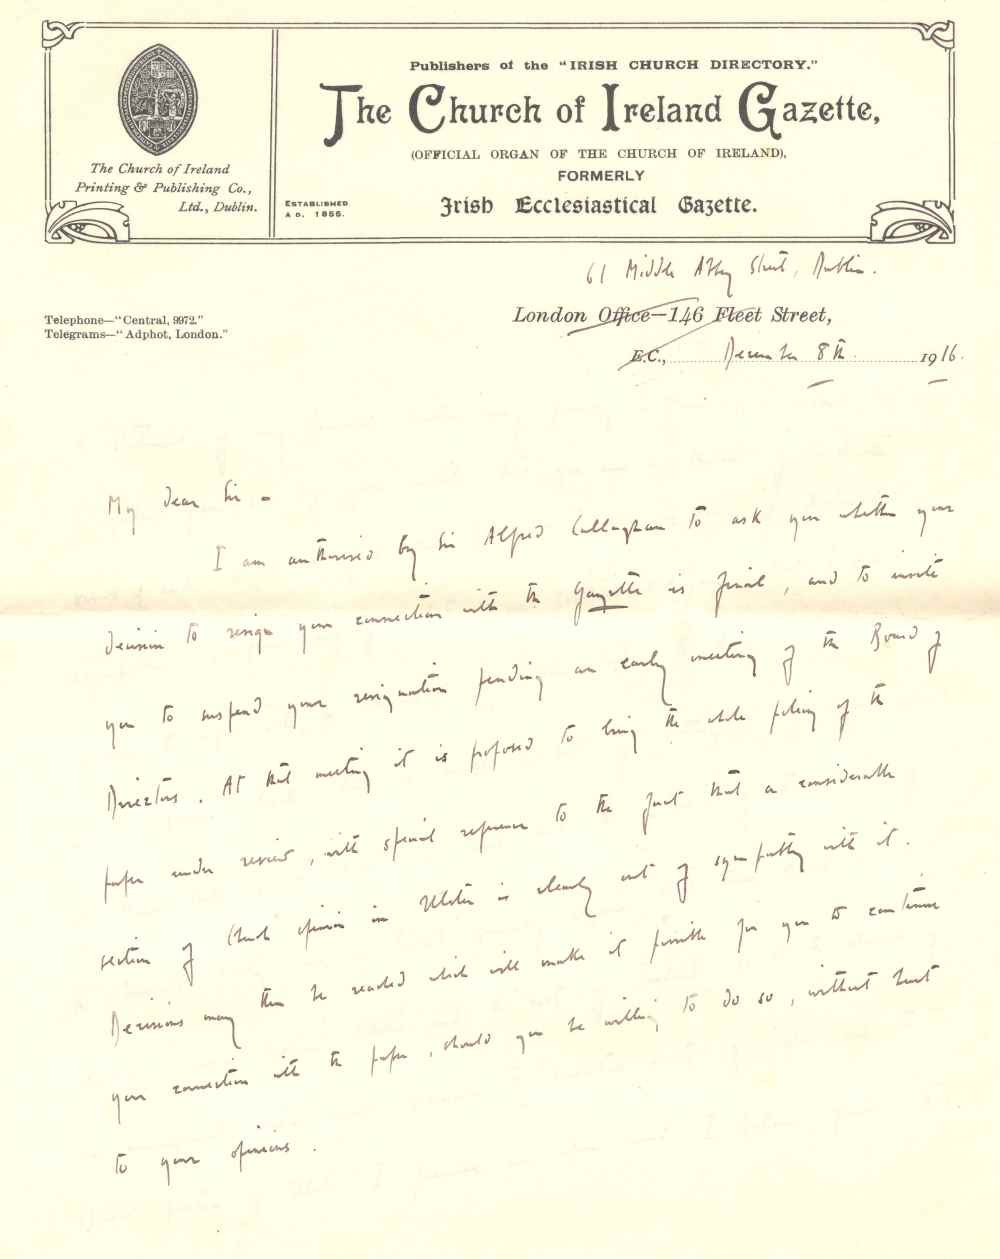 Warre B. Wells, Editor, Church of Ireland Gazette, 61 Middle Abbey   Street Dublin, to ‘My Dear Sir', 9 December 1916, RCB Library MS 813/2/1/8